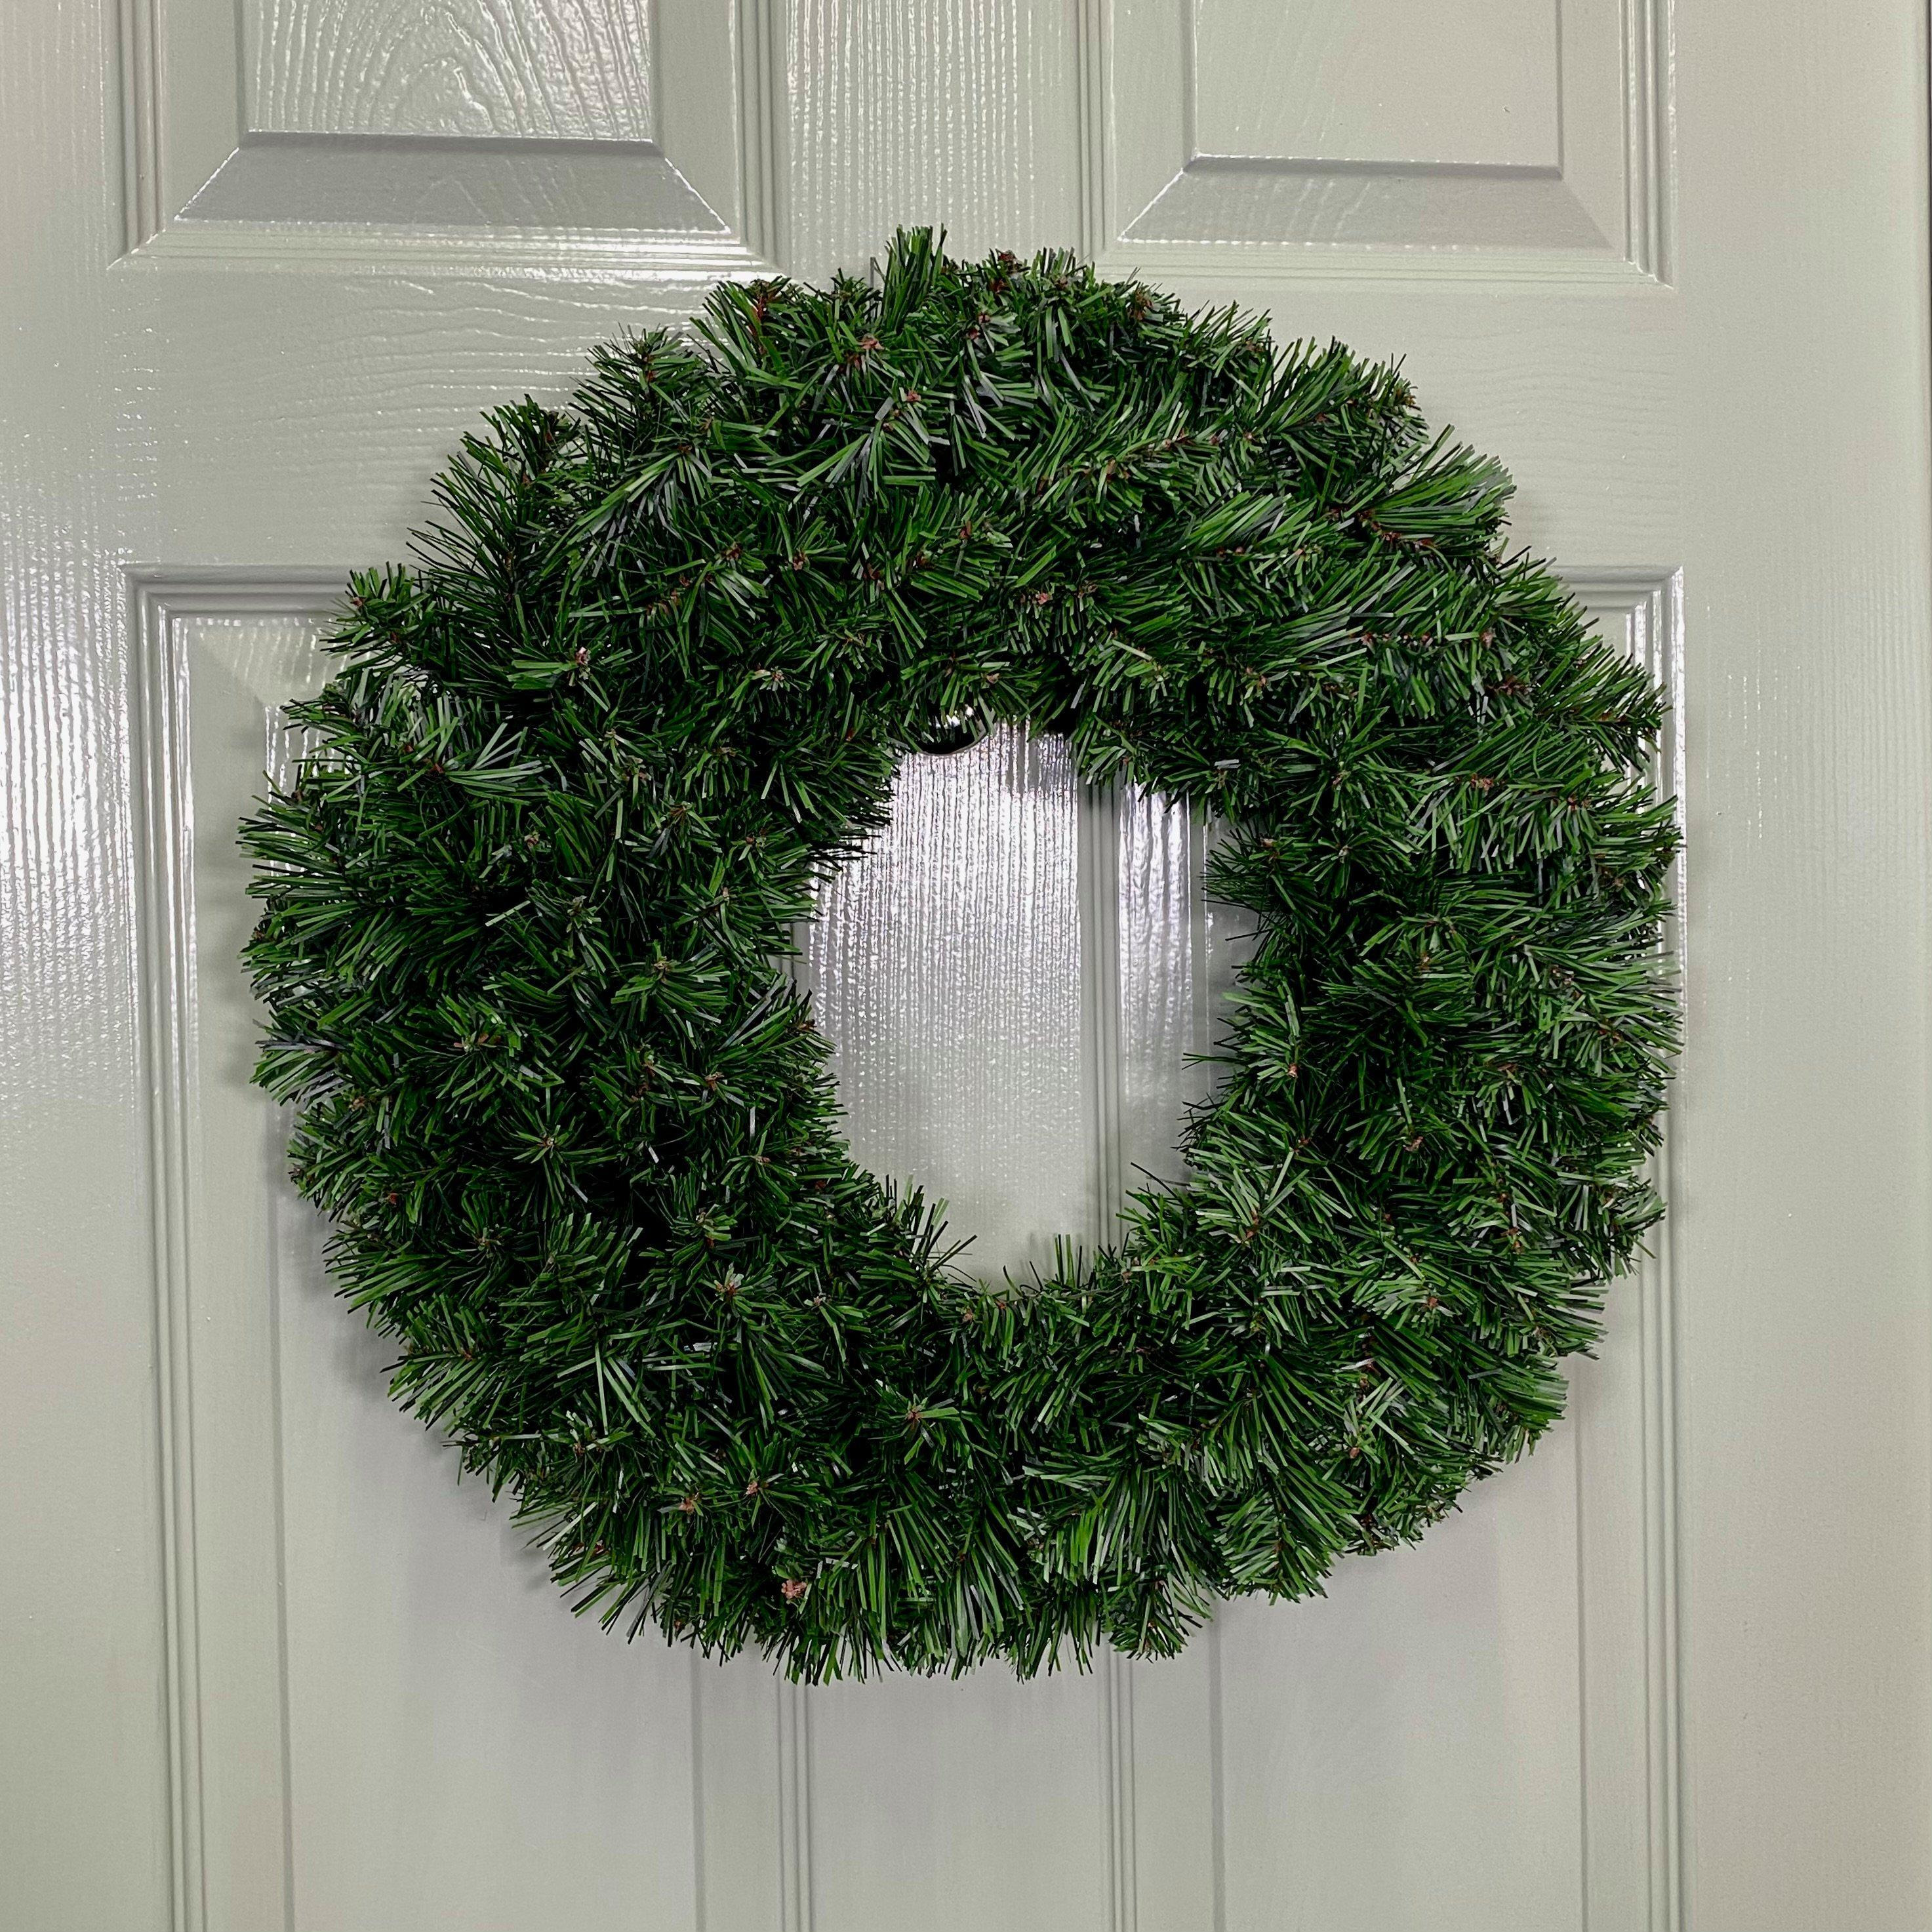 40cm Plain Green Canadian Pine Artificial Christmas Wreath - image 1